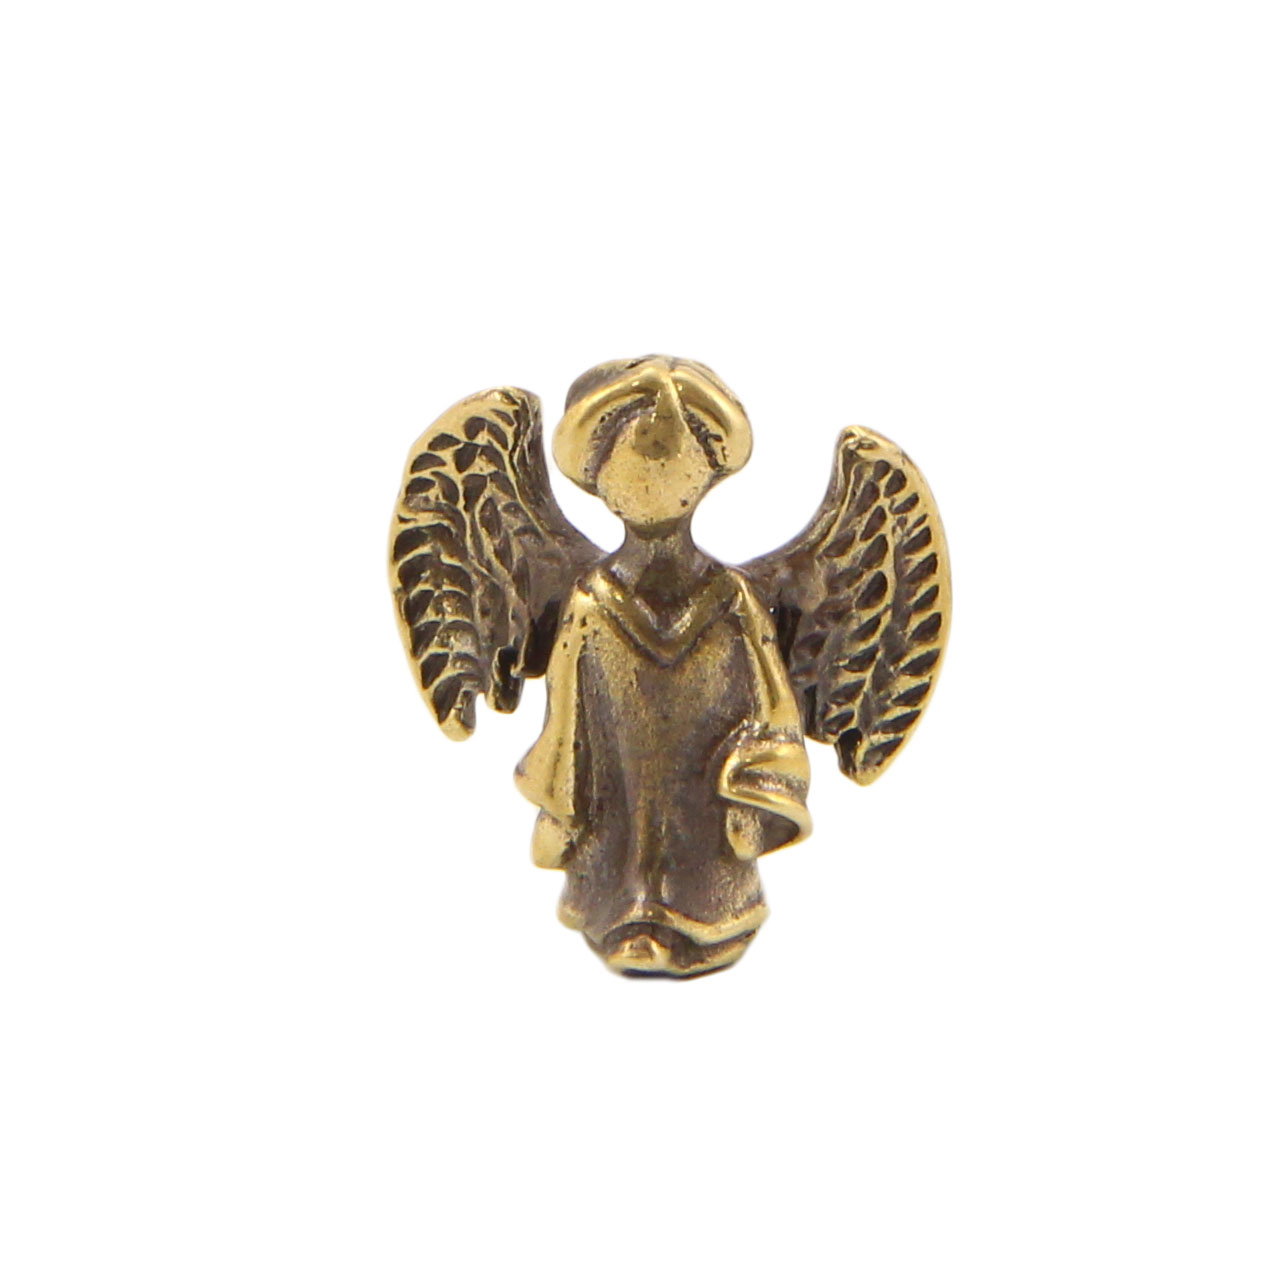 Бронзовый сувенир Ангел безликий малыйФото 15455-12.jpg